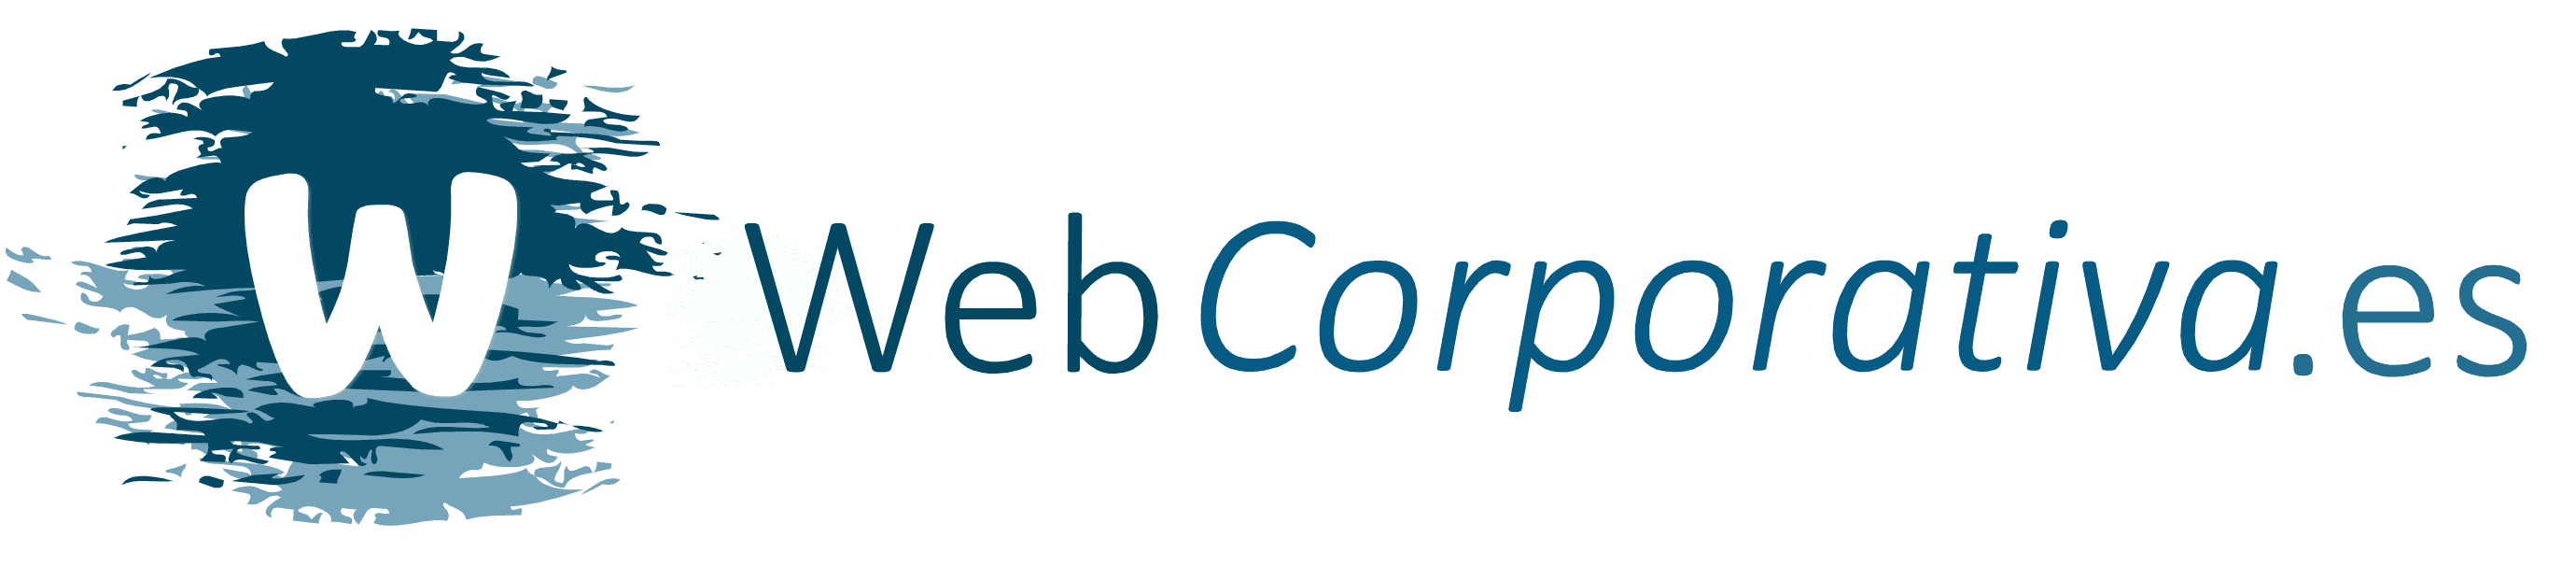 Web Coporativa New